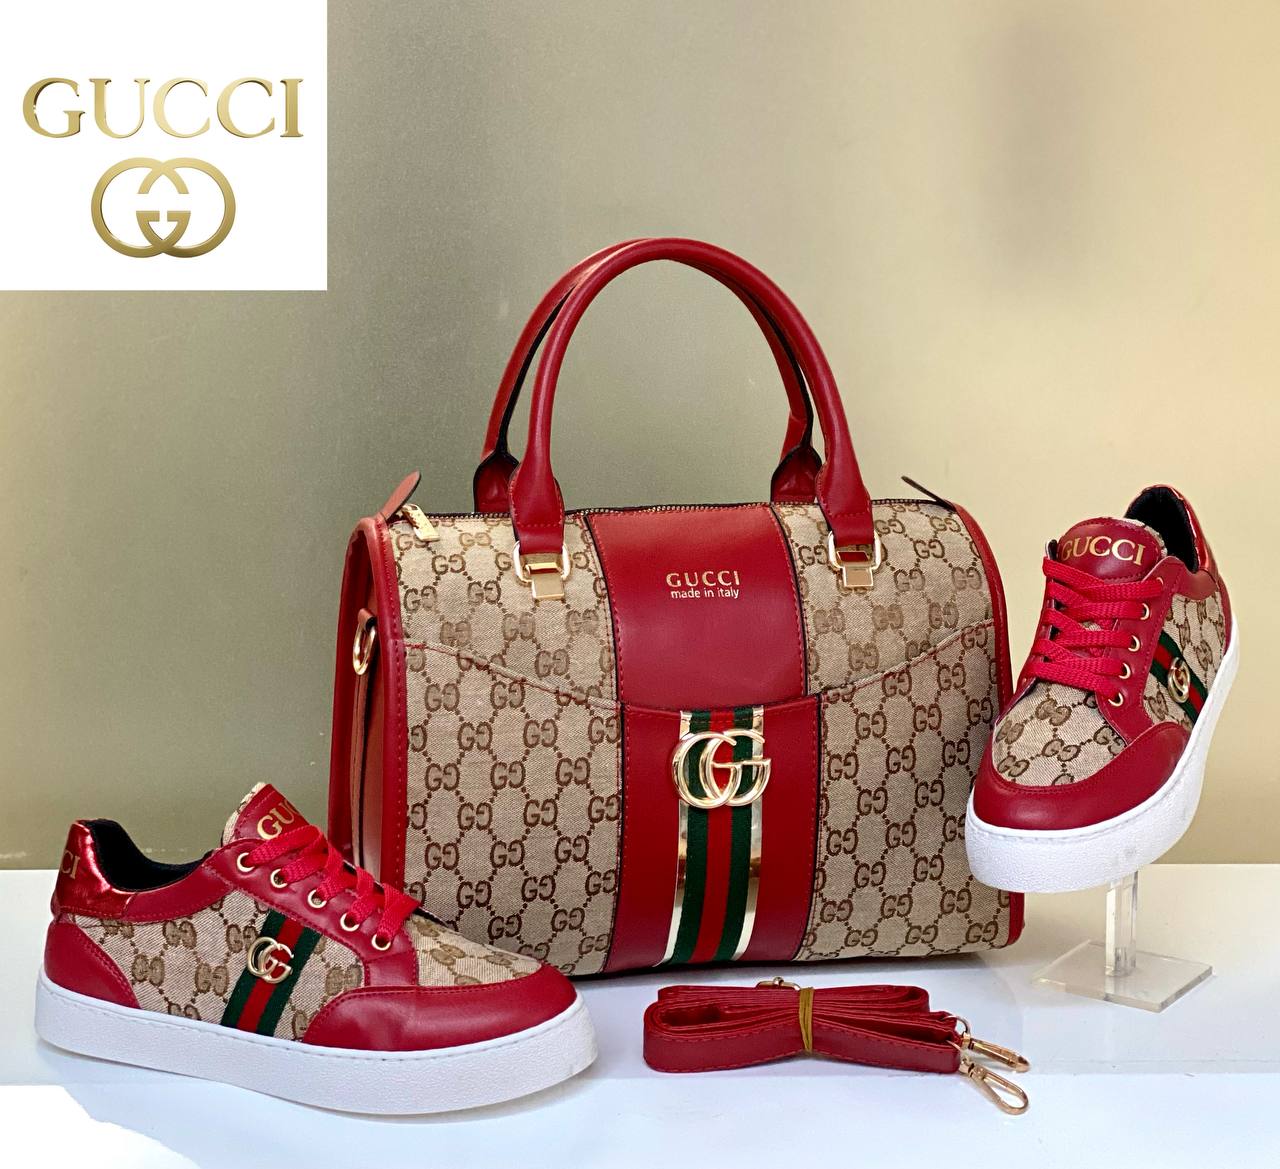 Gucci sneakers and handbag